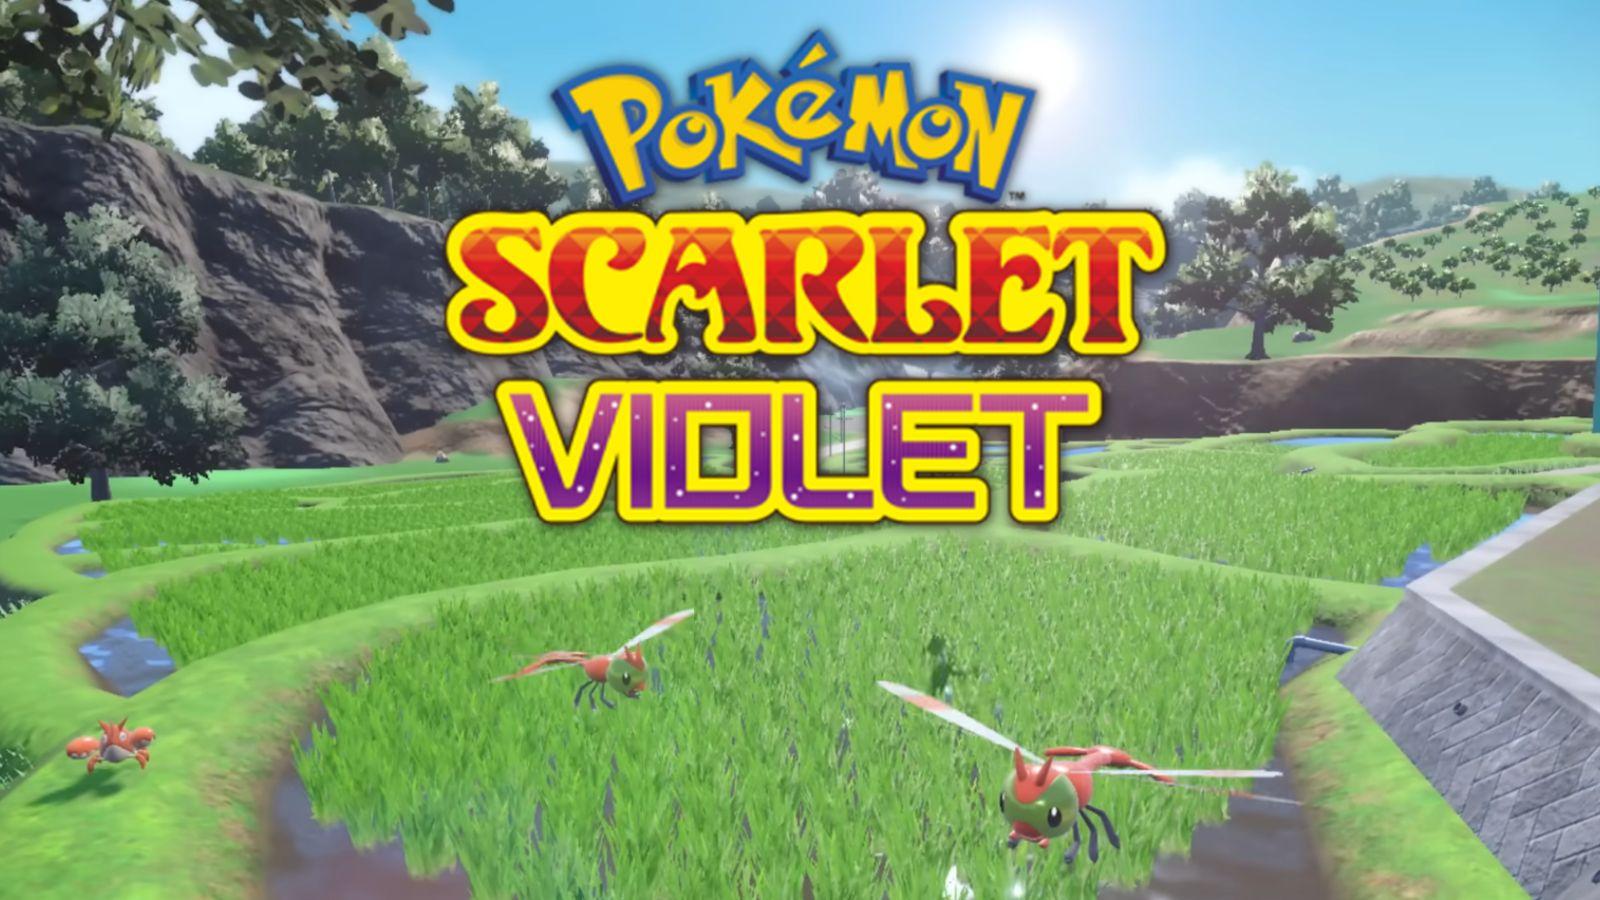 Pokemon Scarlet Violet DLC by xForge on Newgrounds